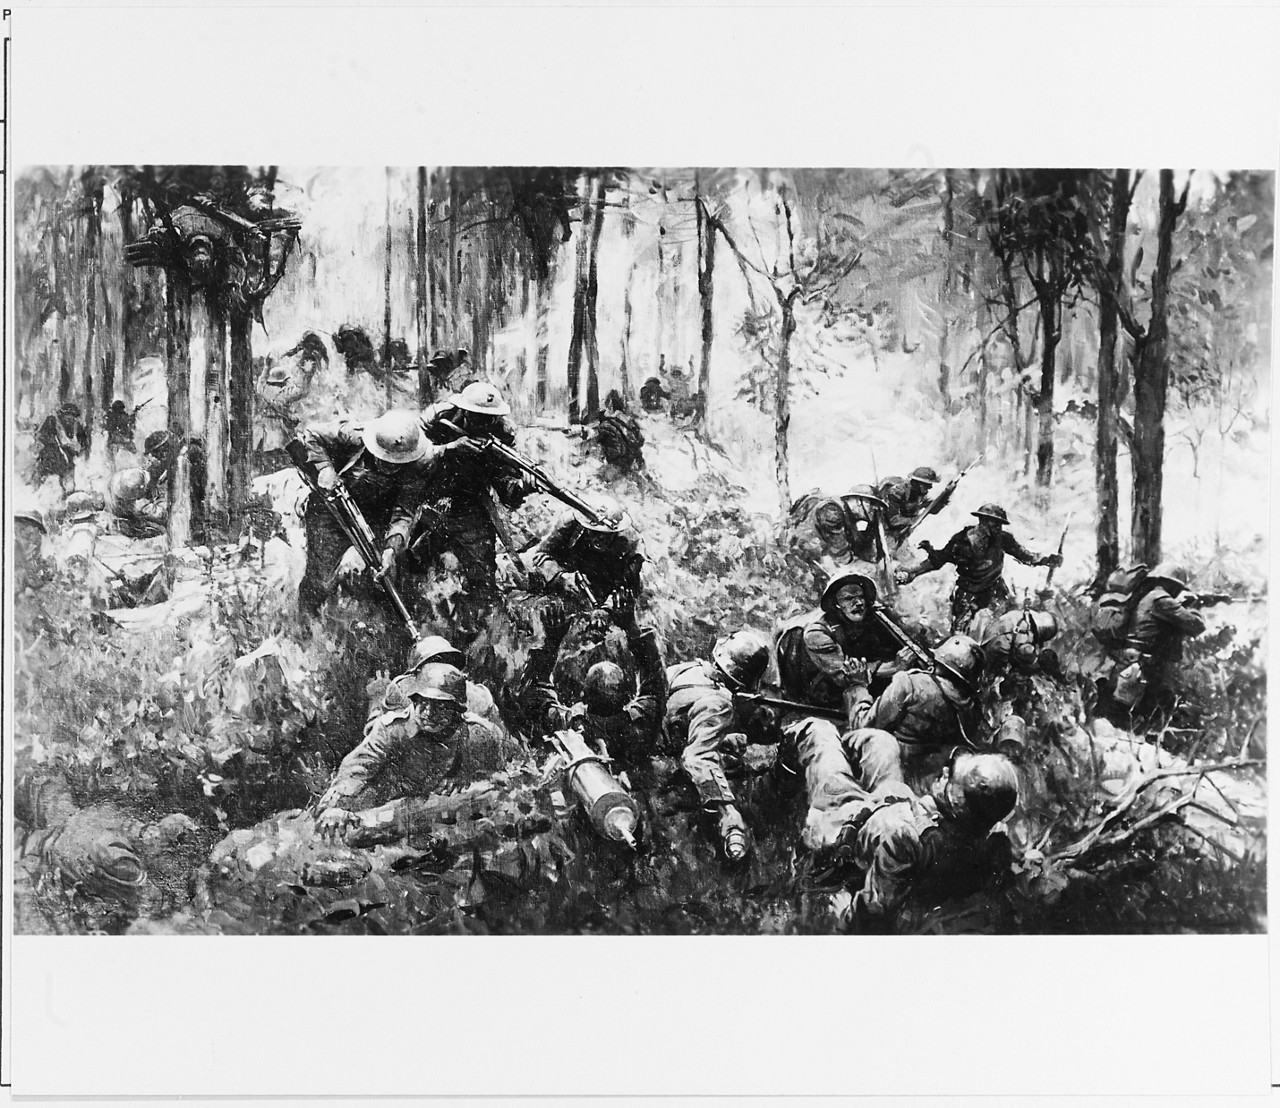 Marine in close combat assault against German soldiers .